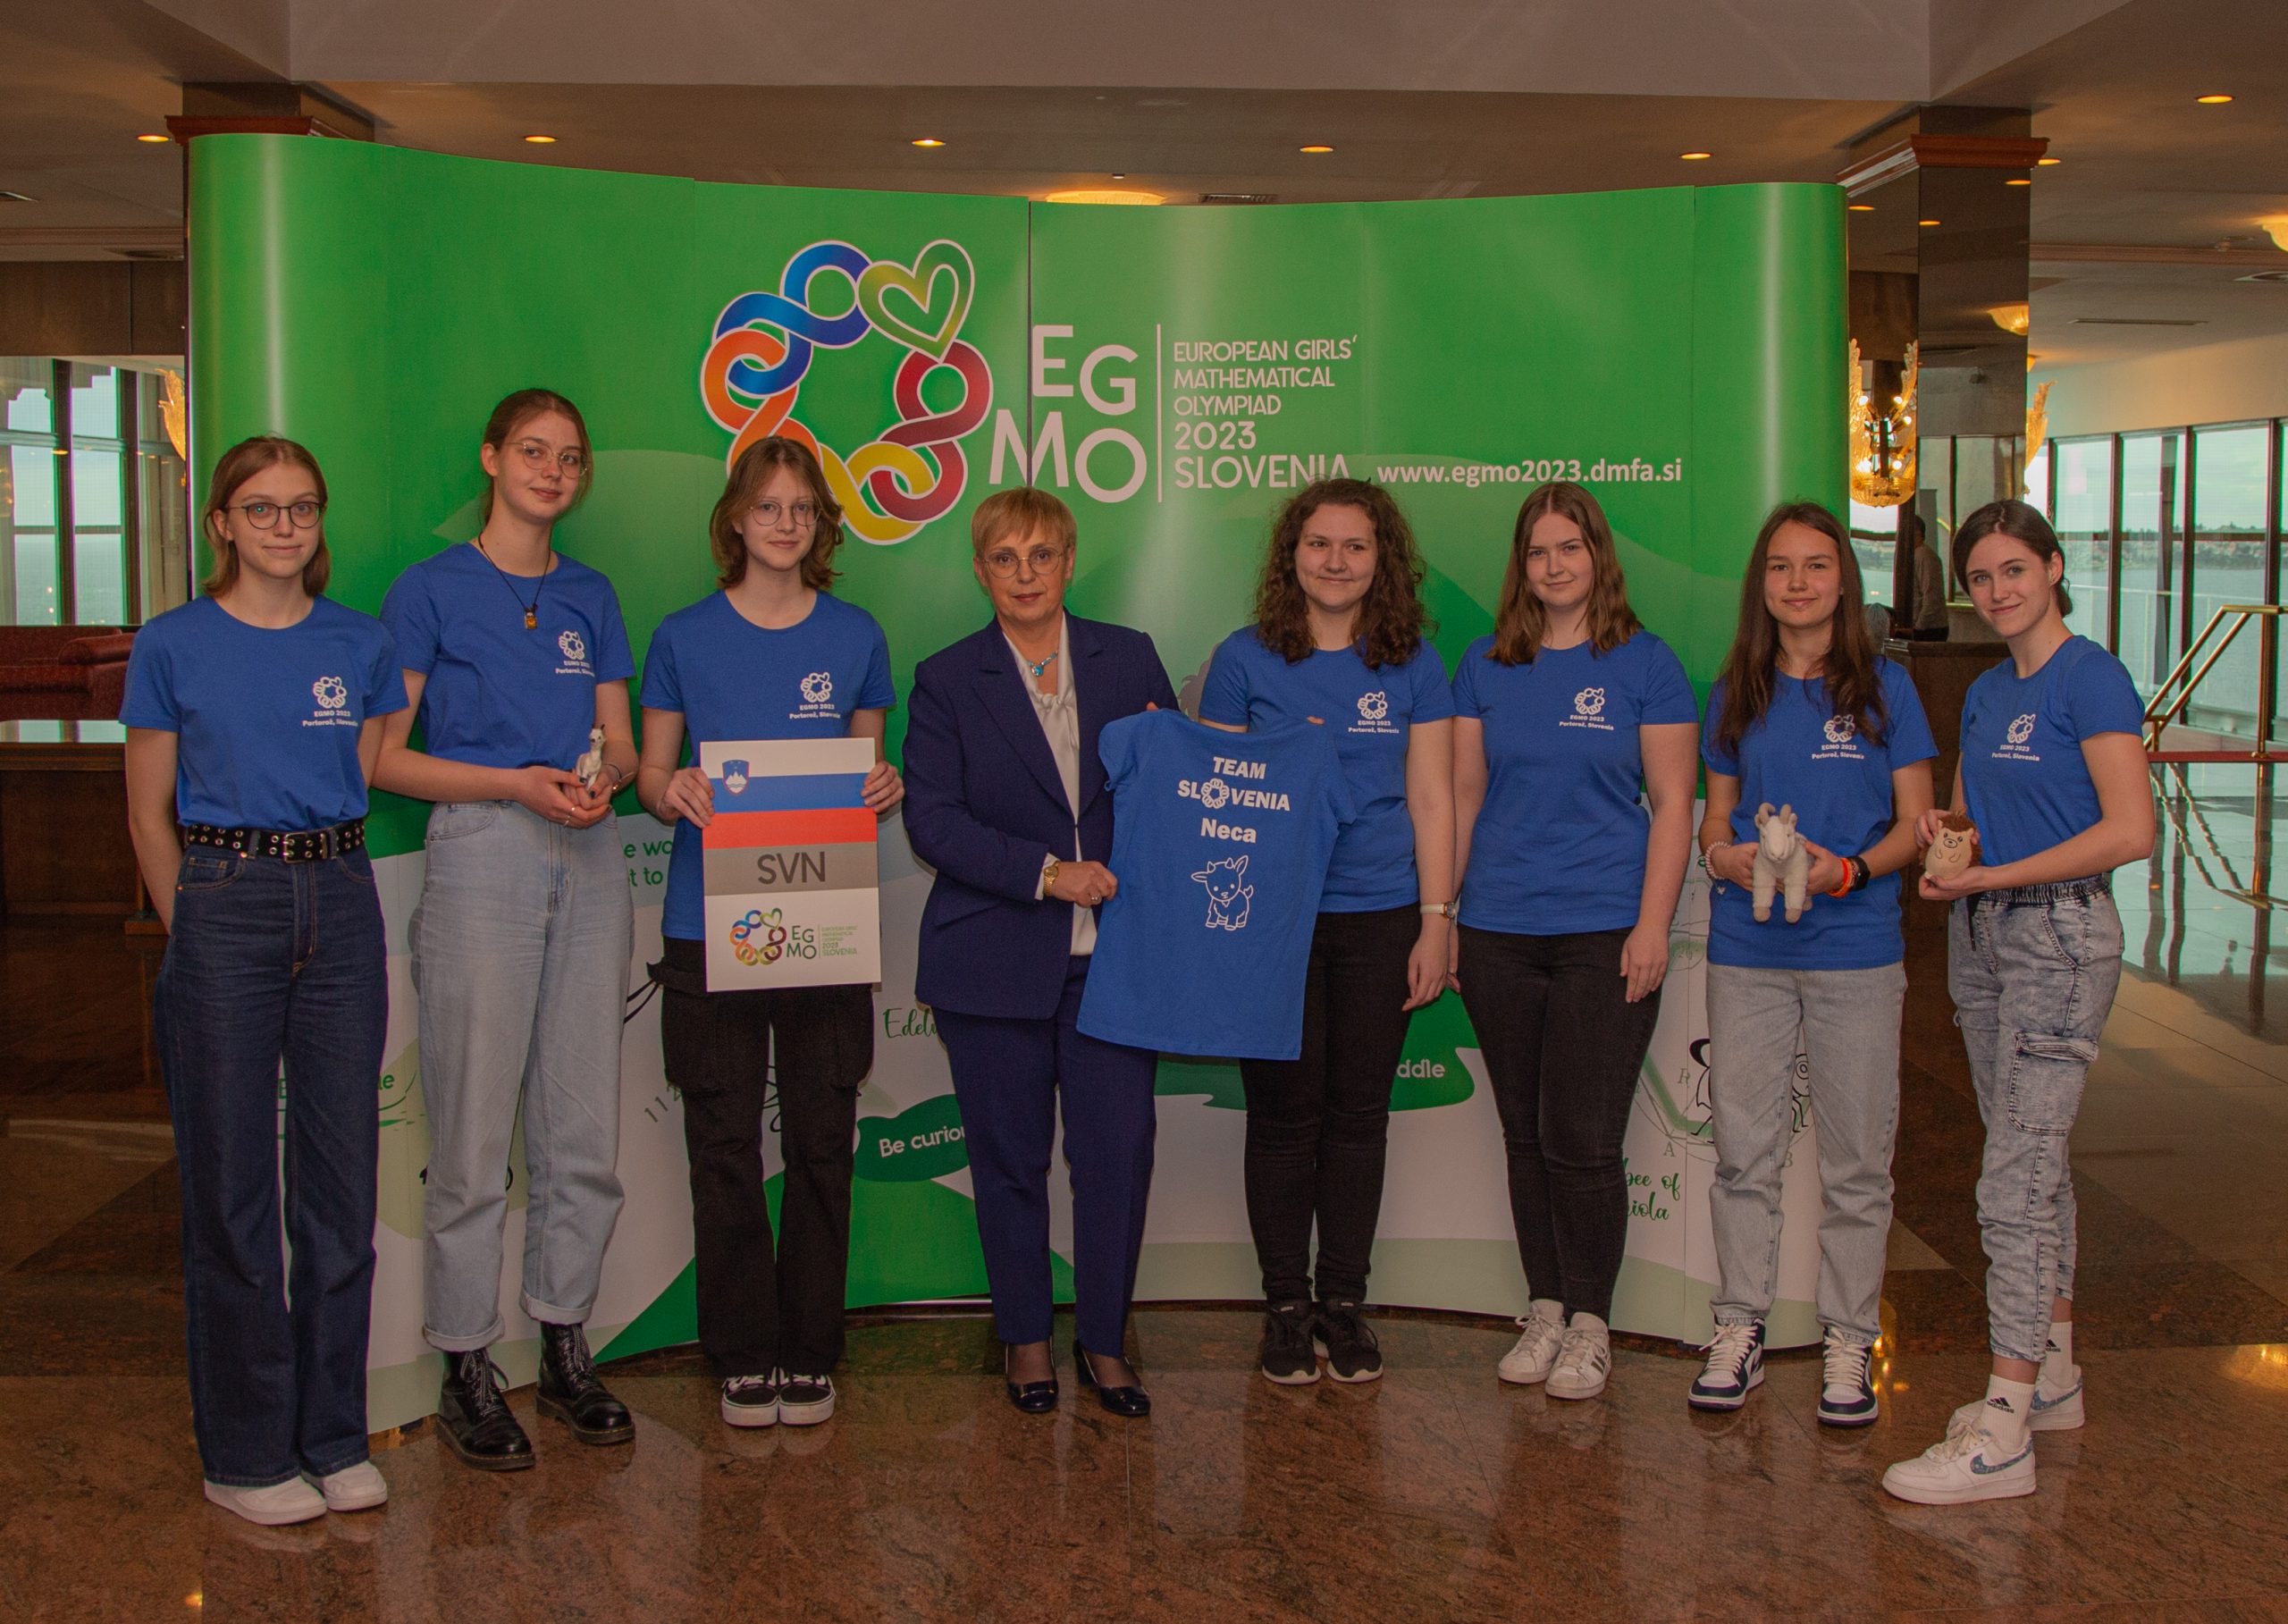 European Girls' Mathematical Olympiad: Germany (GER) at EGMO 2023 in  Slovenia